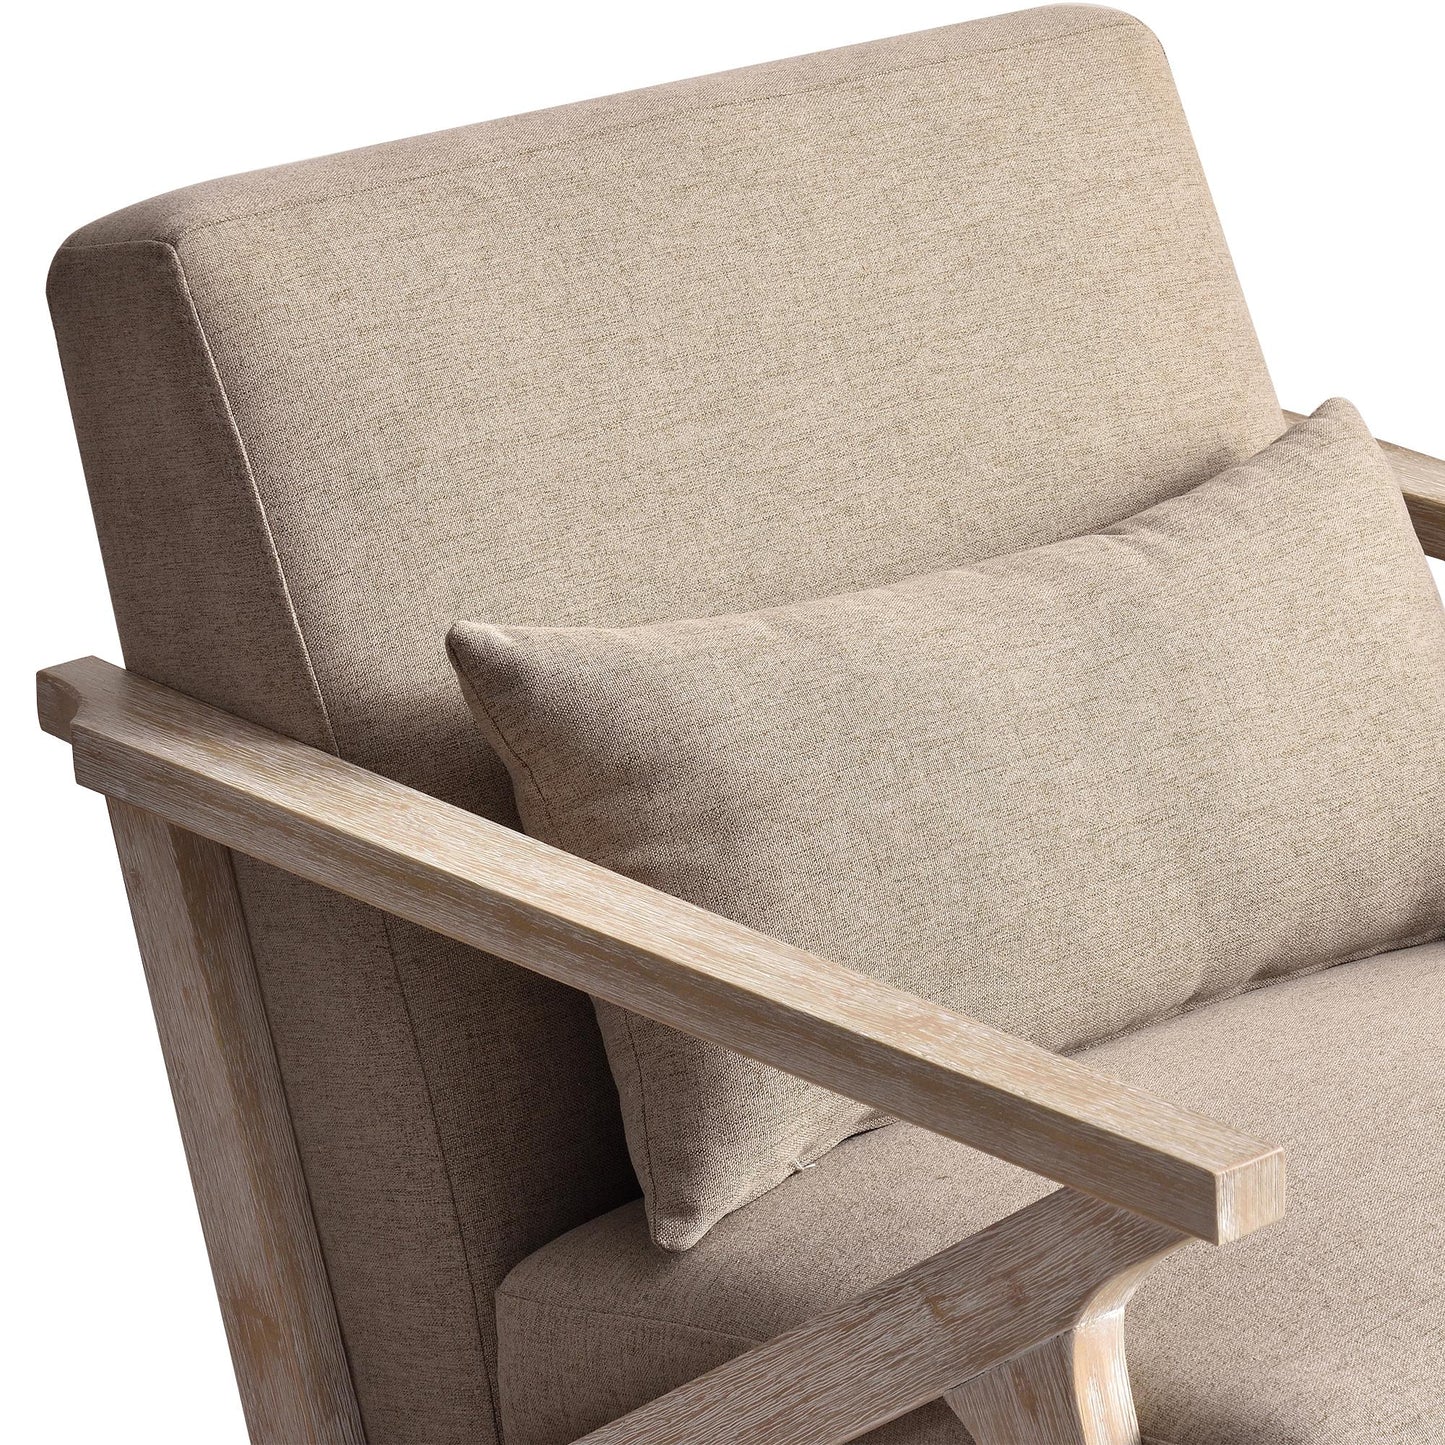 AvaMalis Mid Century Modern Wood Frame, Upholstered Armchair with Waist Cushion